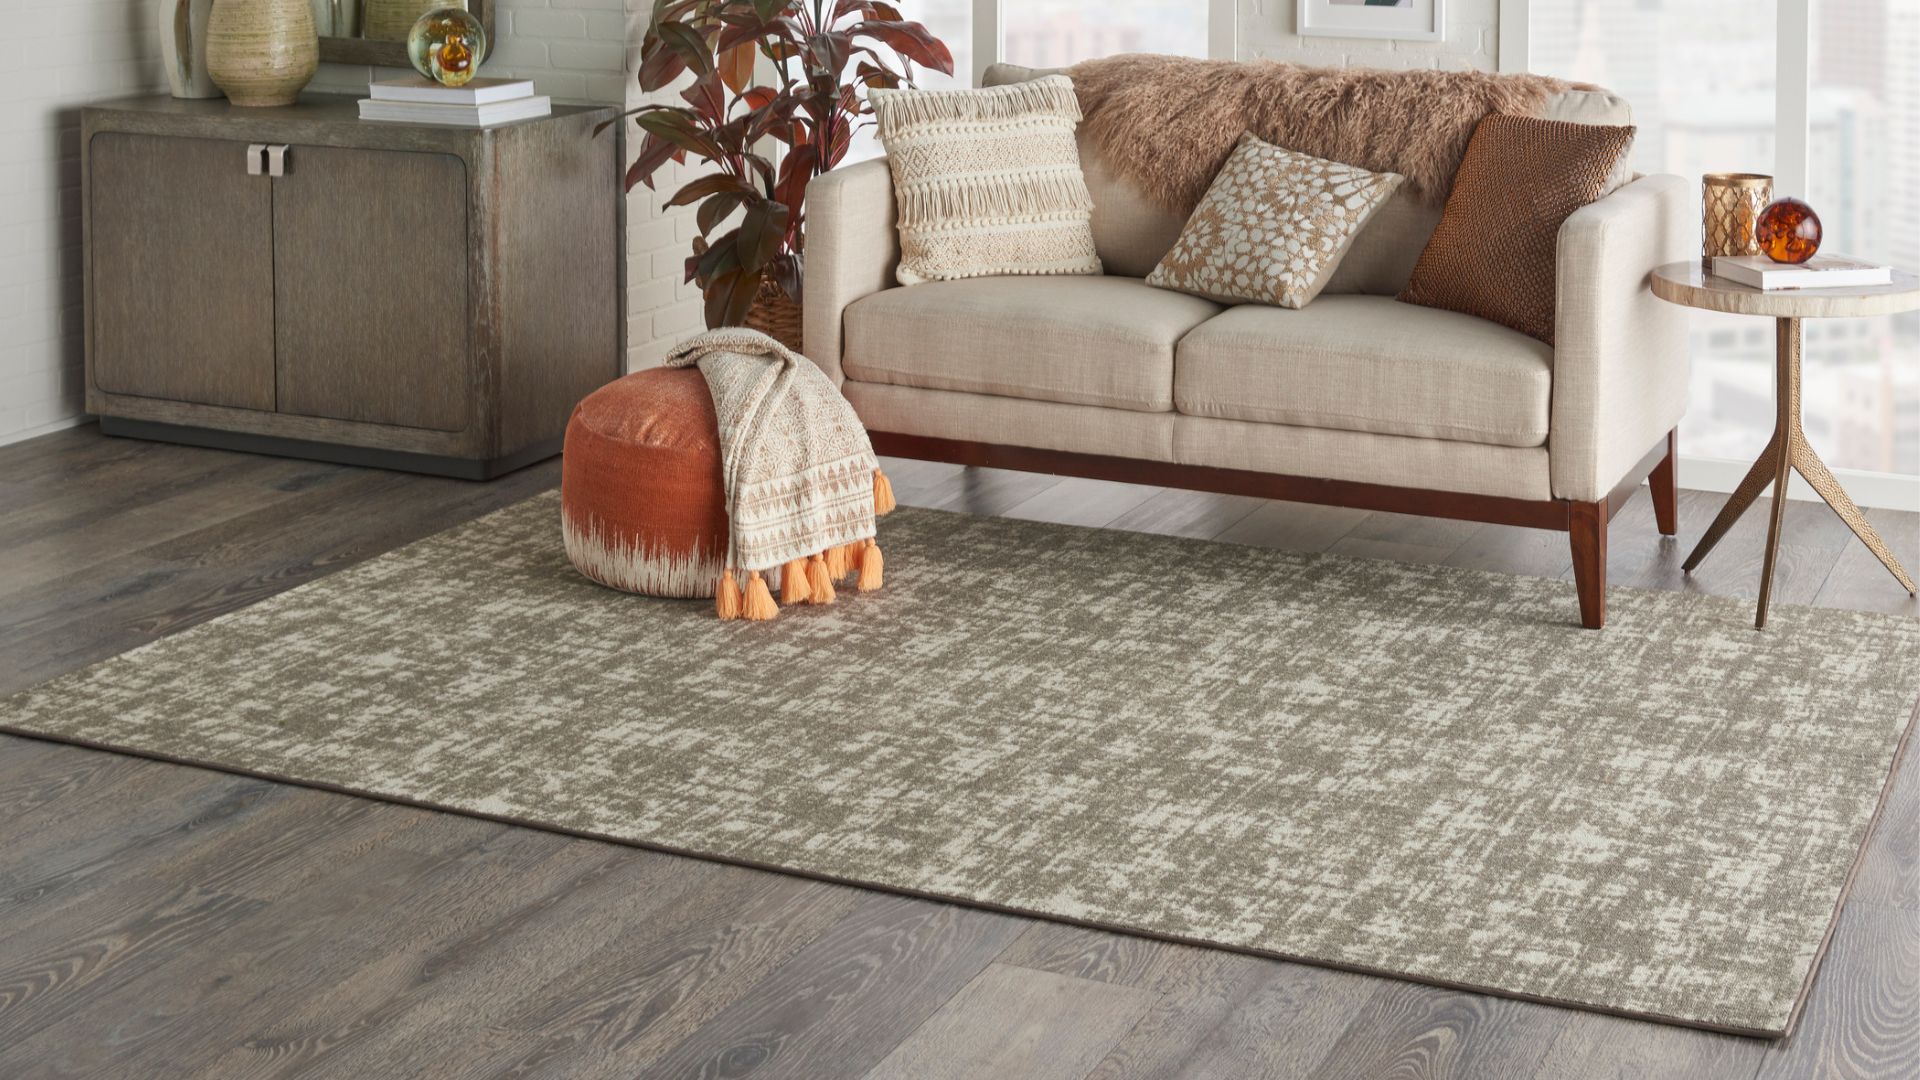 Custom area rug in a living room